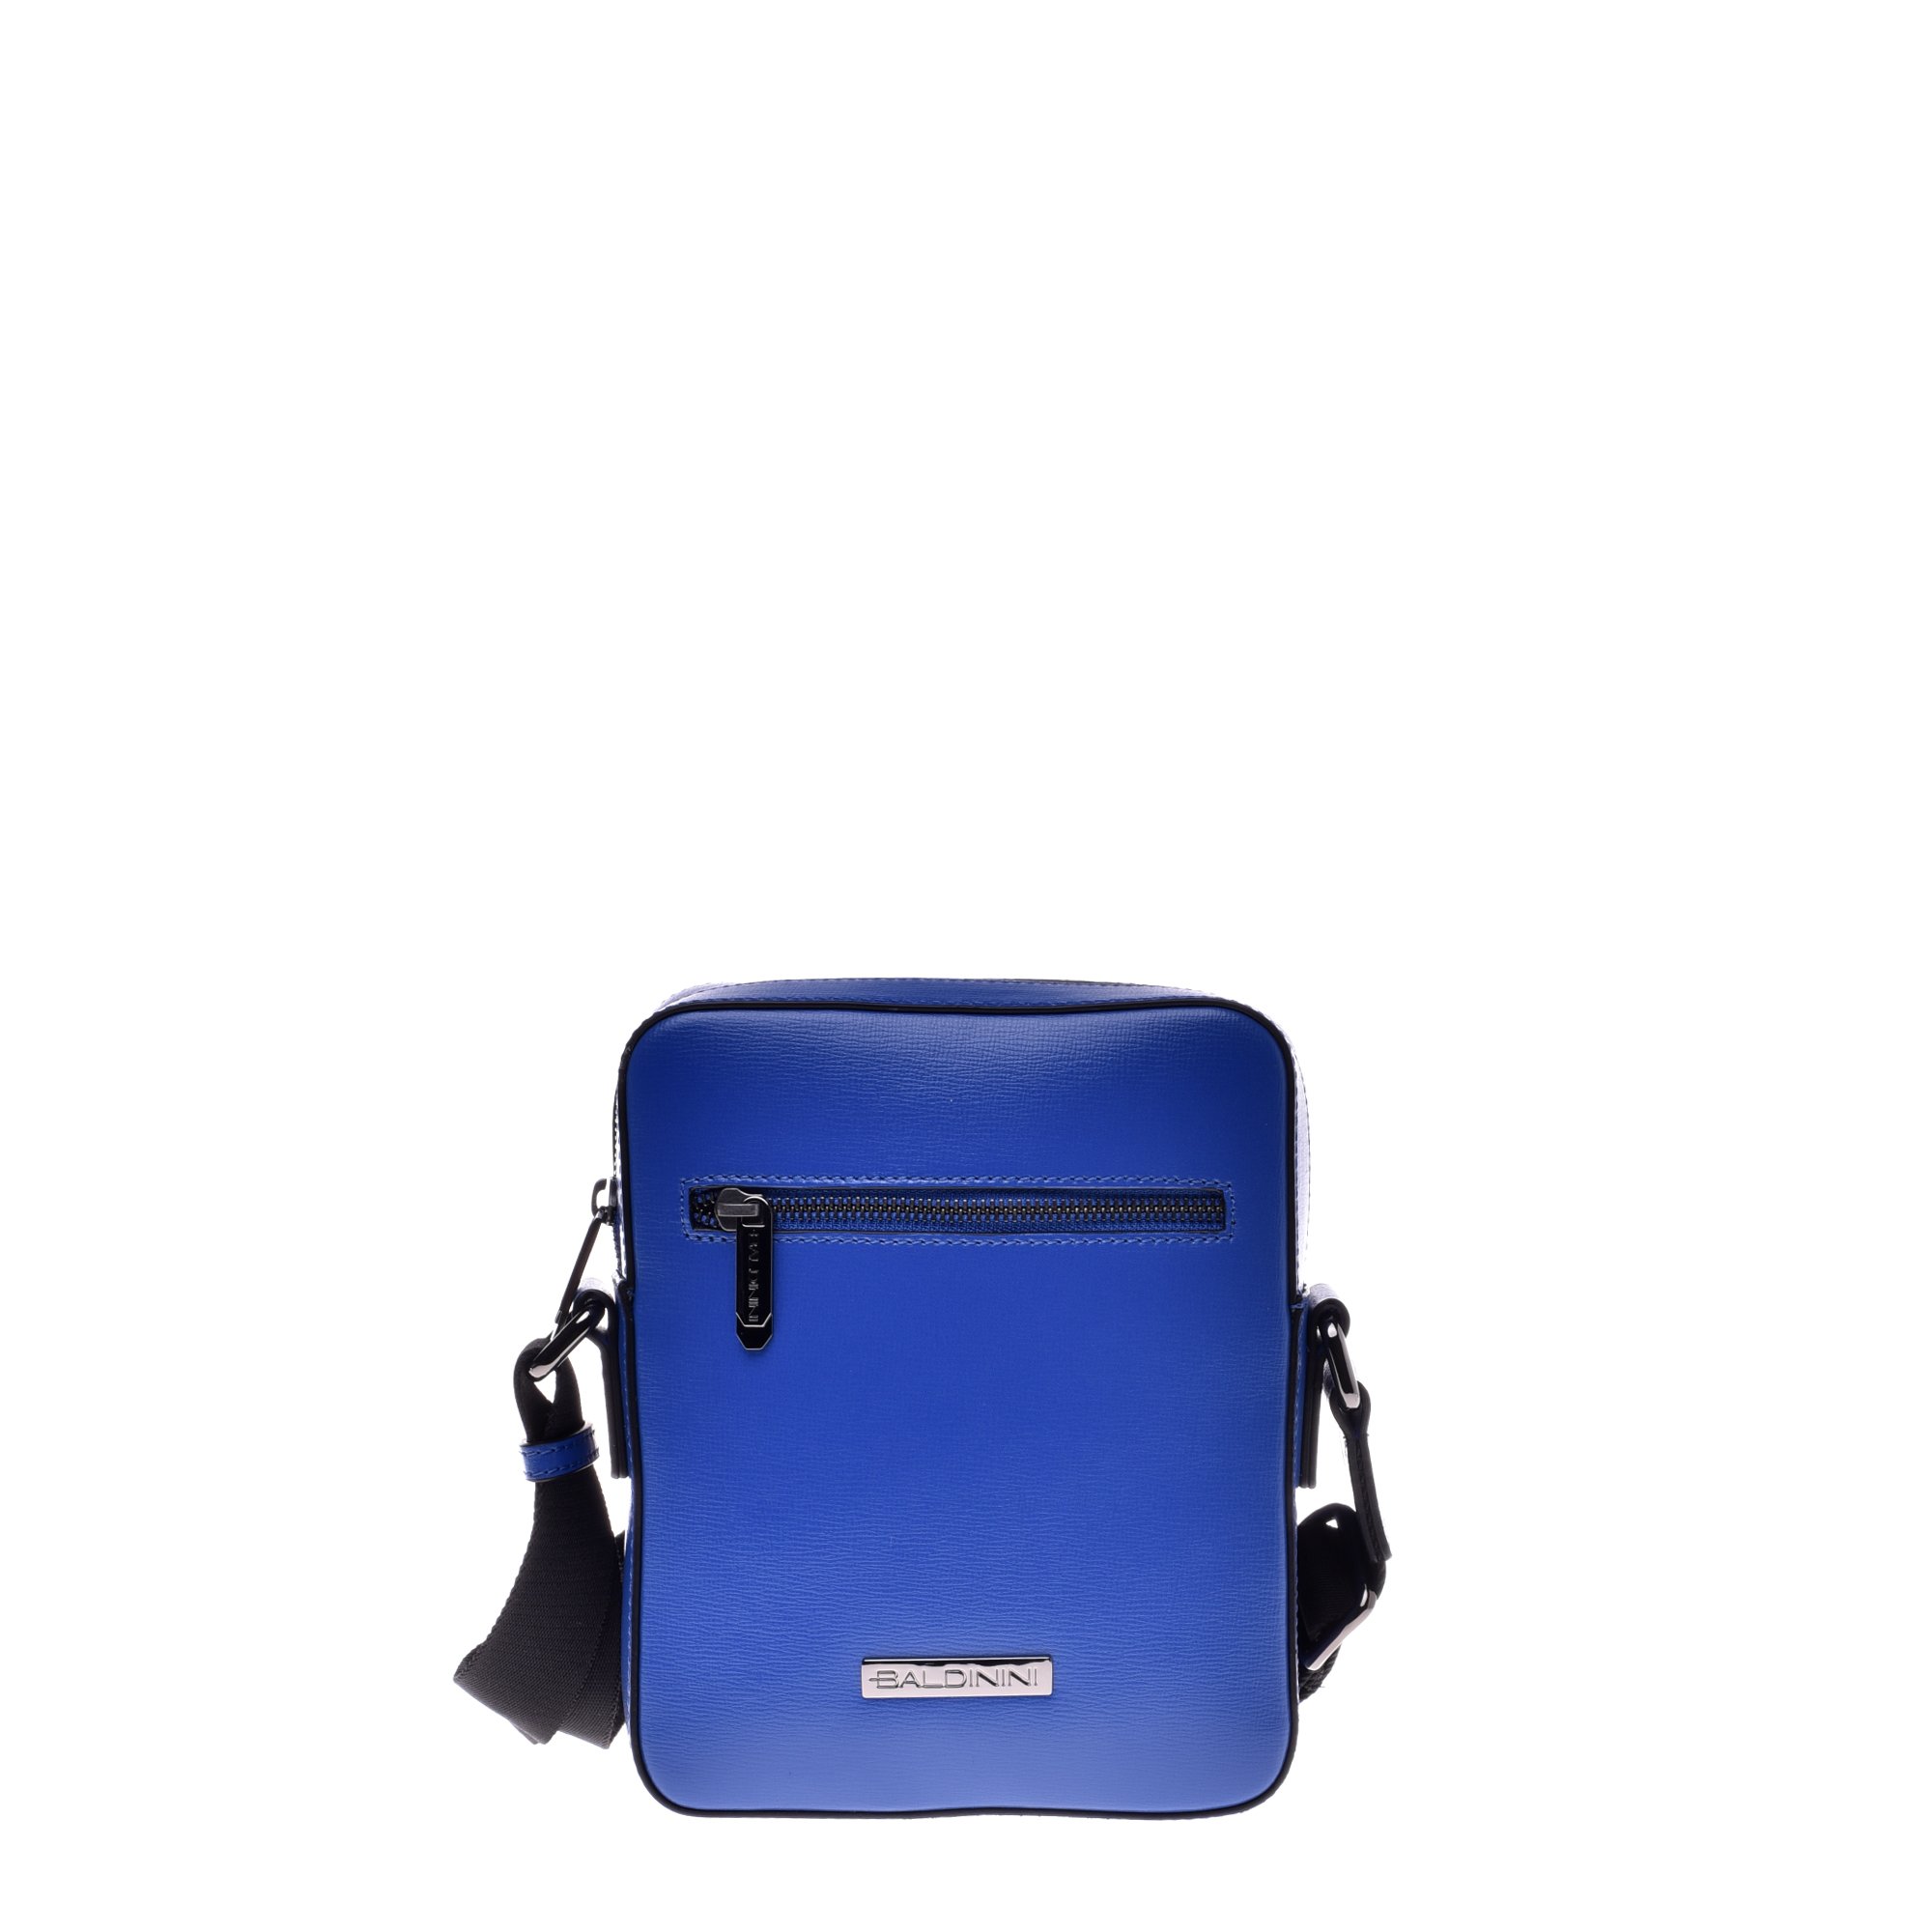 Crossbody bag in electric blue saffiano image